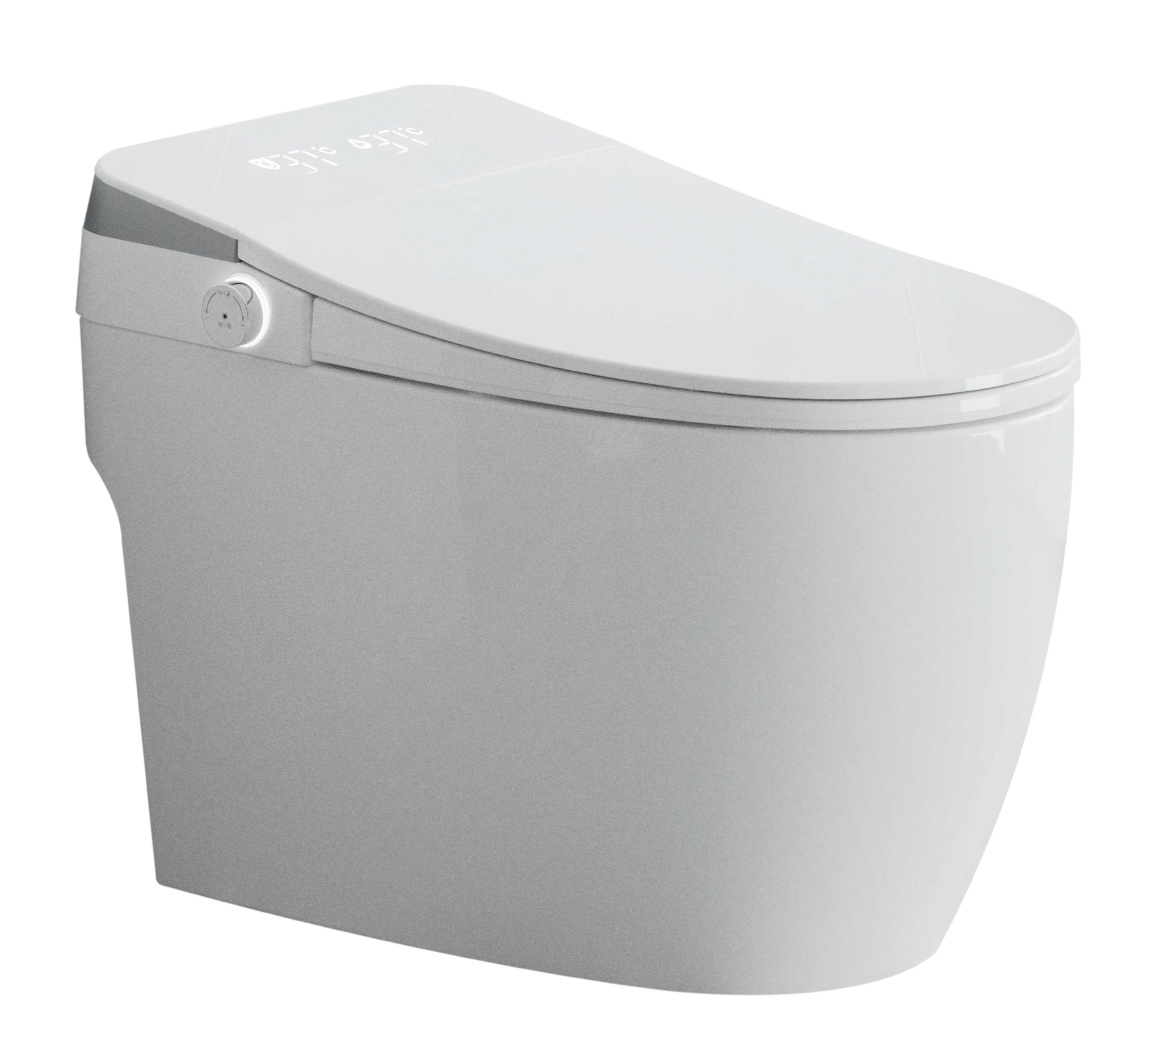 Intelligent smart toilet H-5003